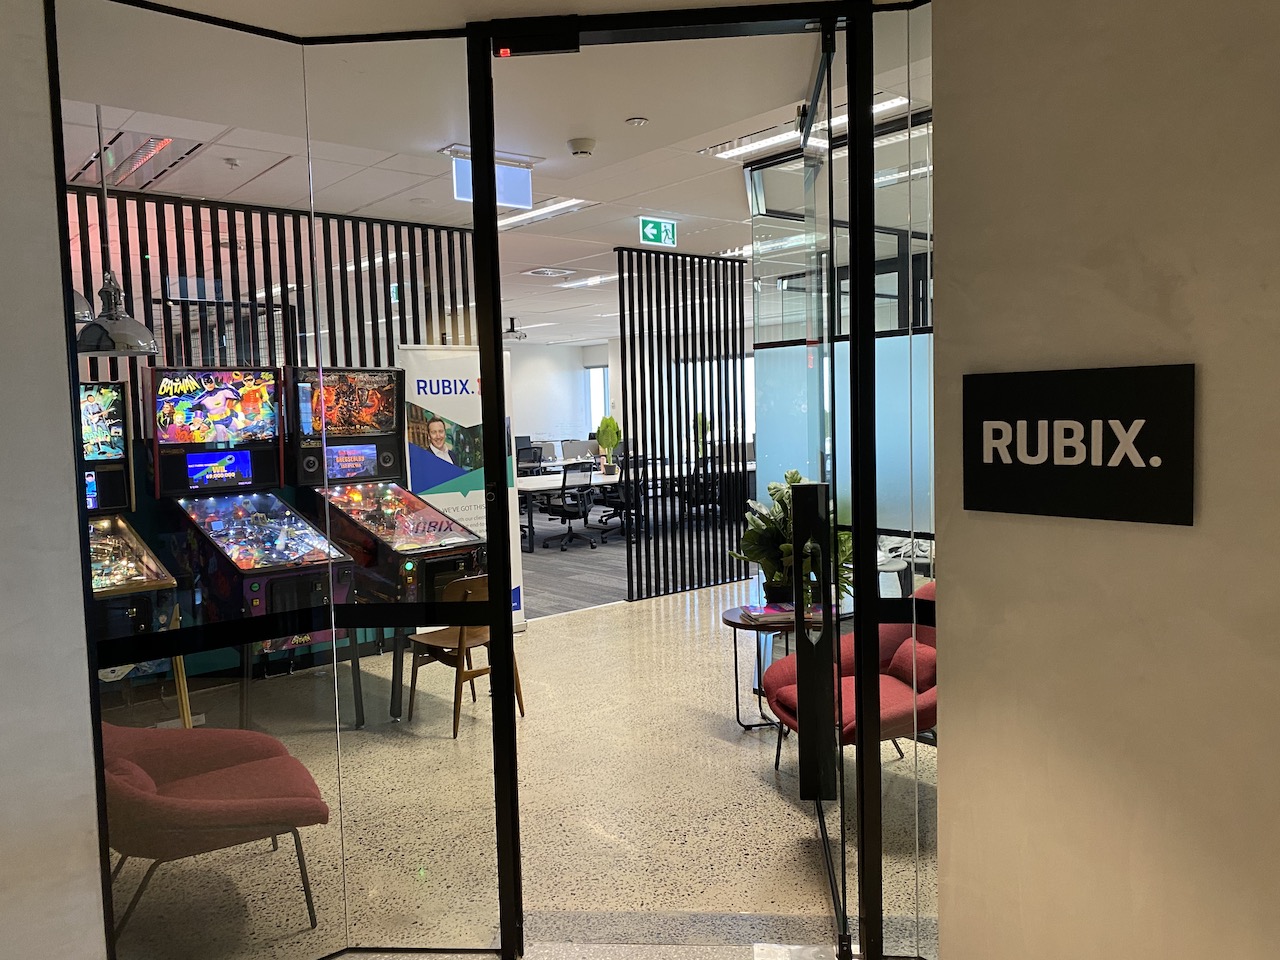 RUBIX. HQ website image